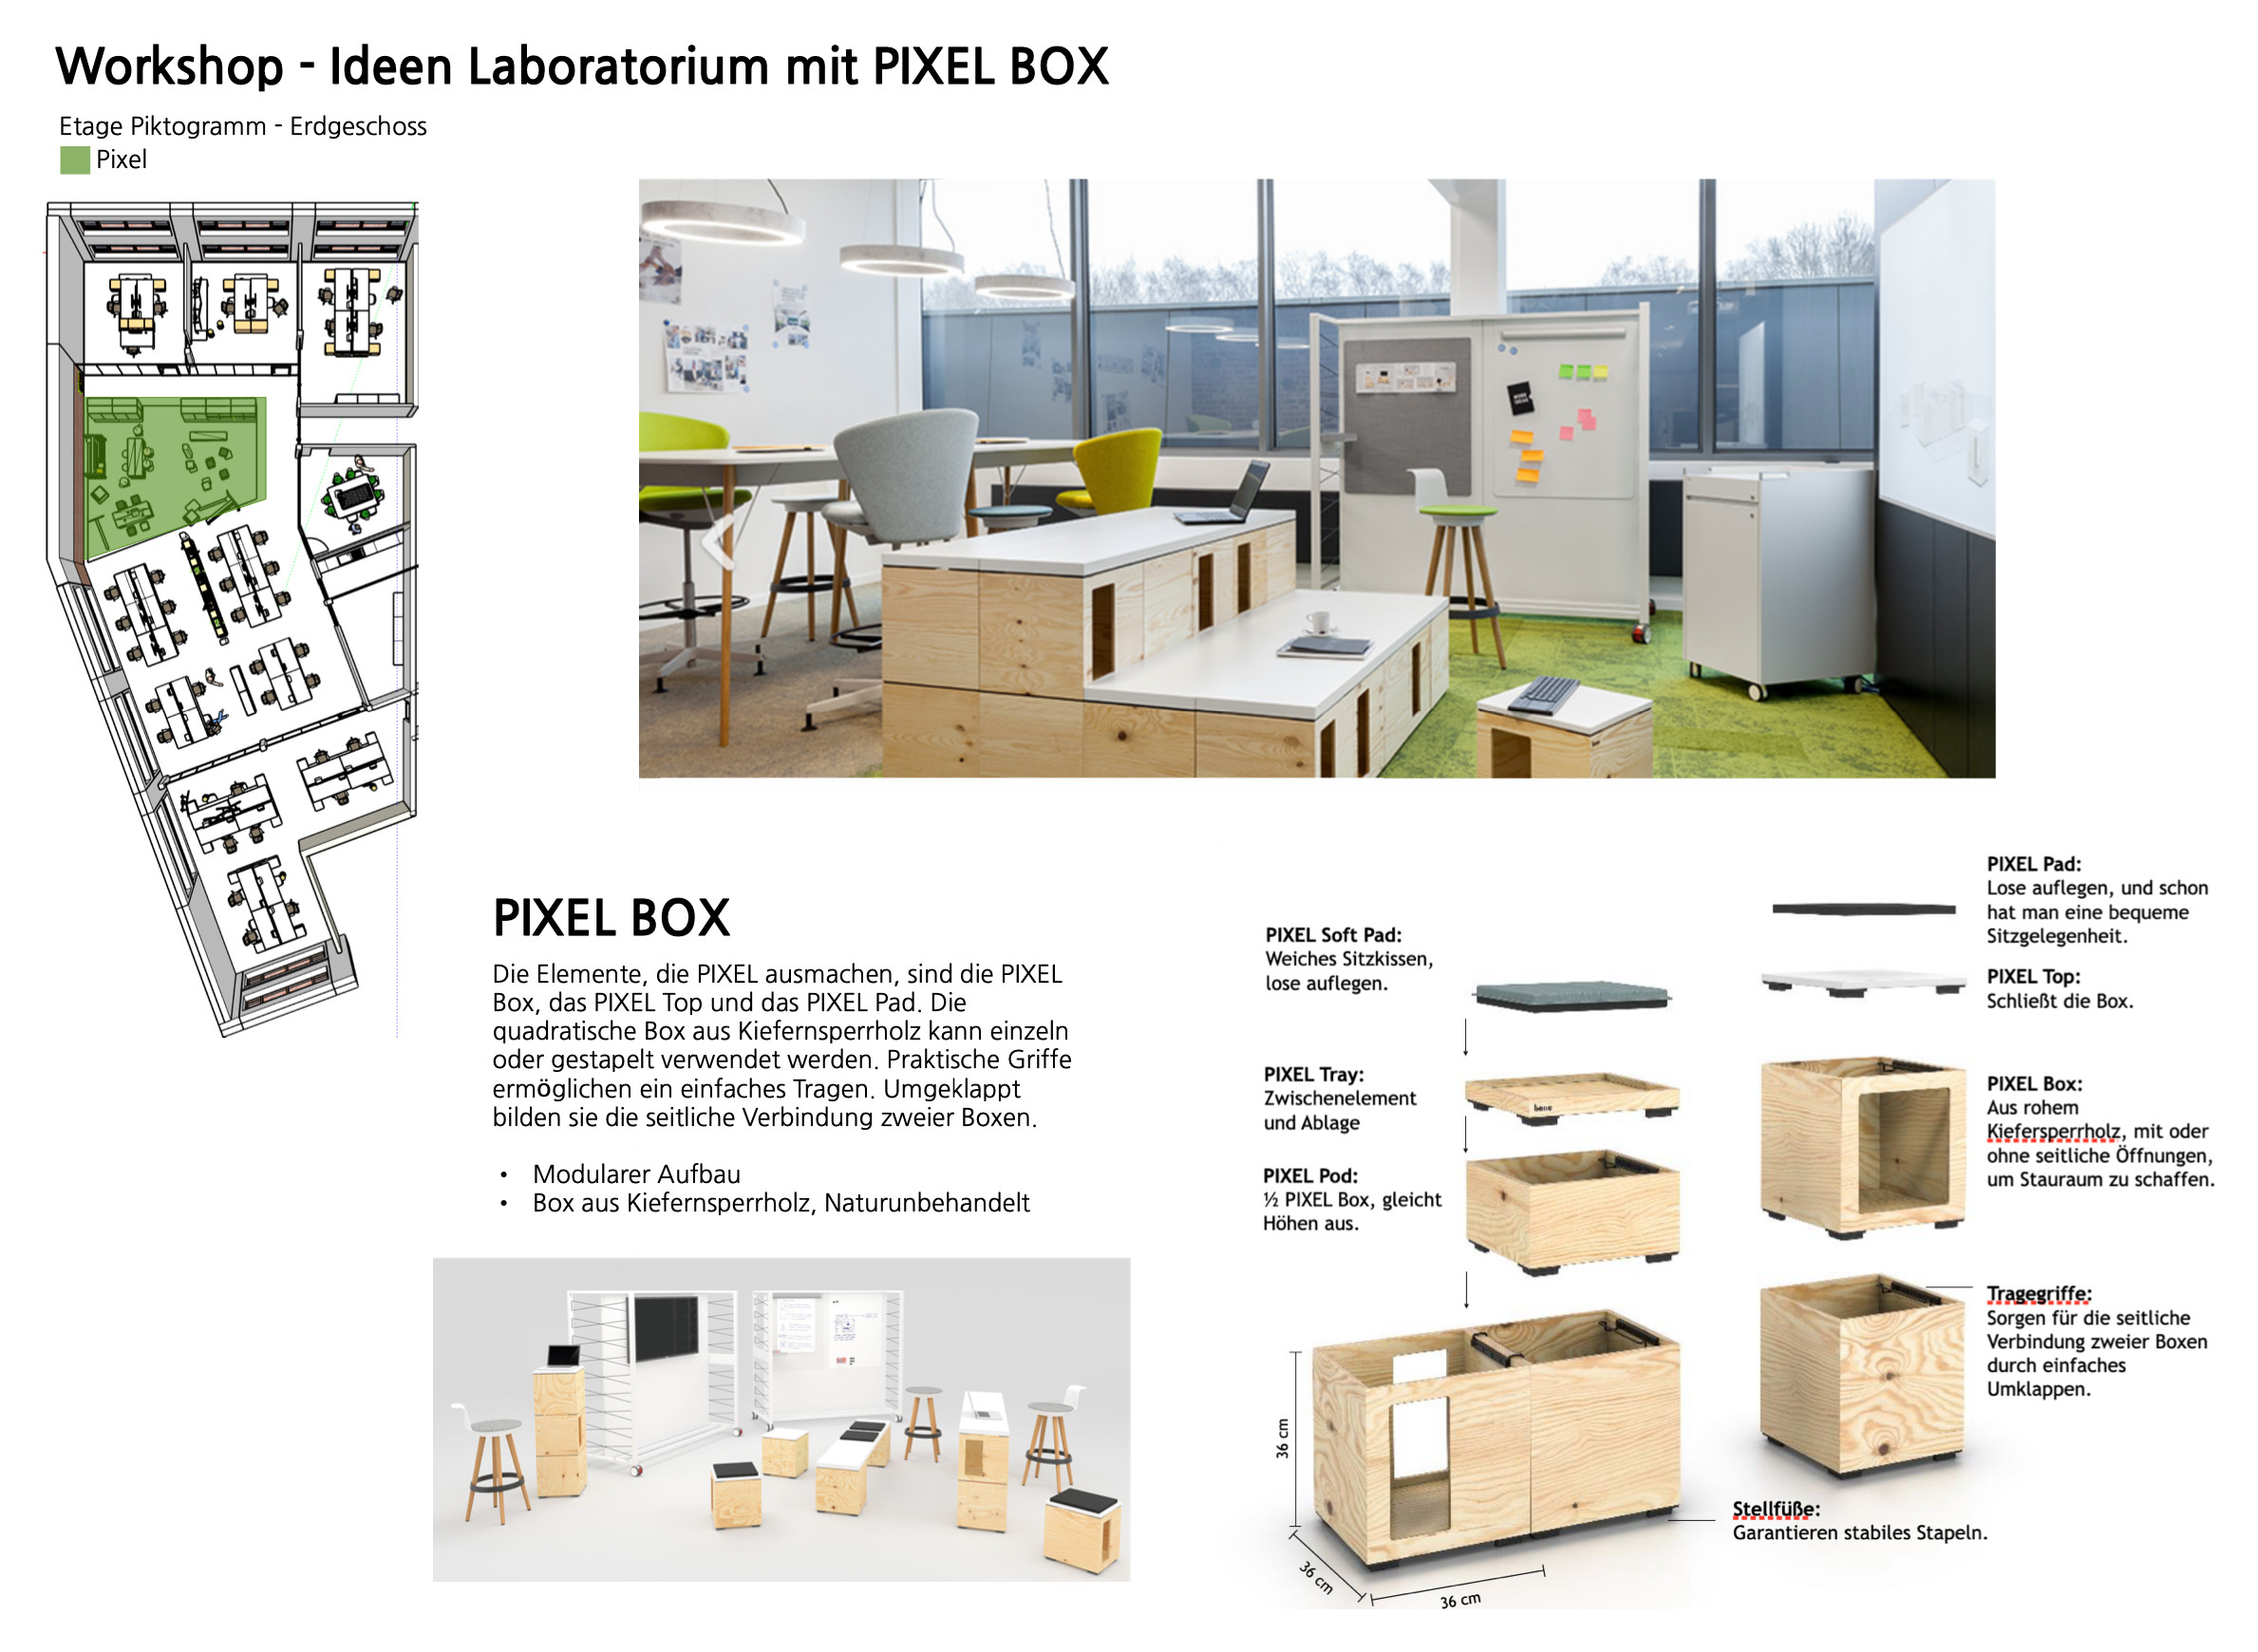 Ideen Laboratorium mit Pixel Box